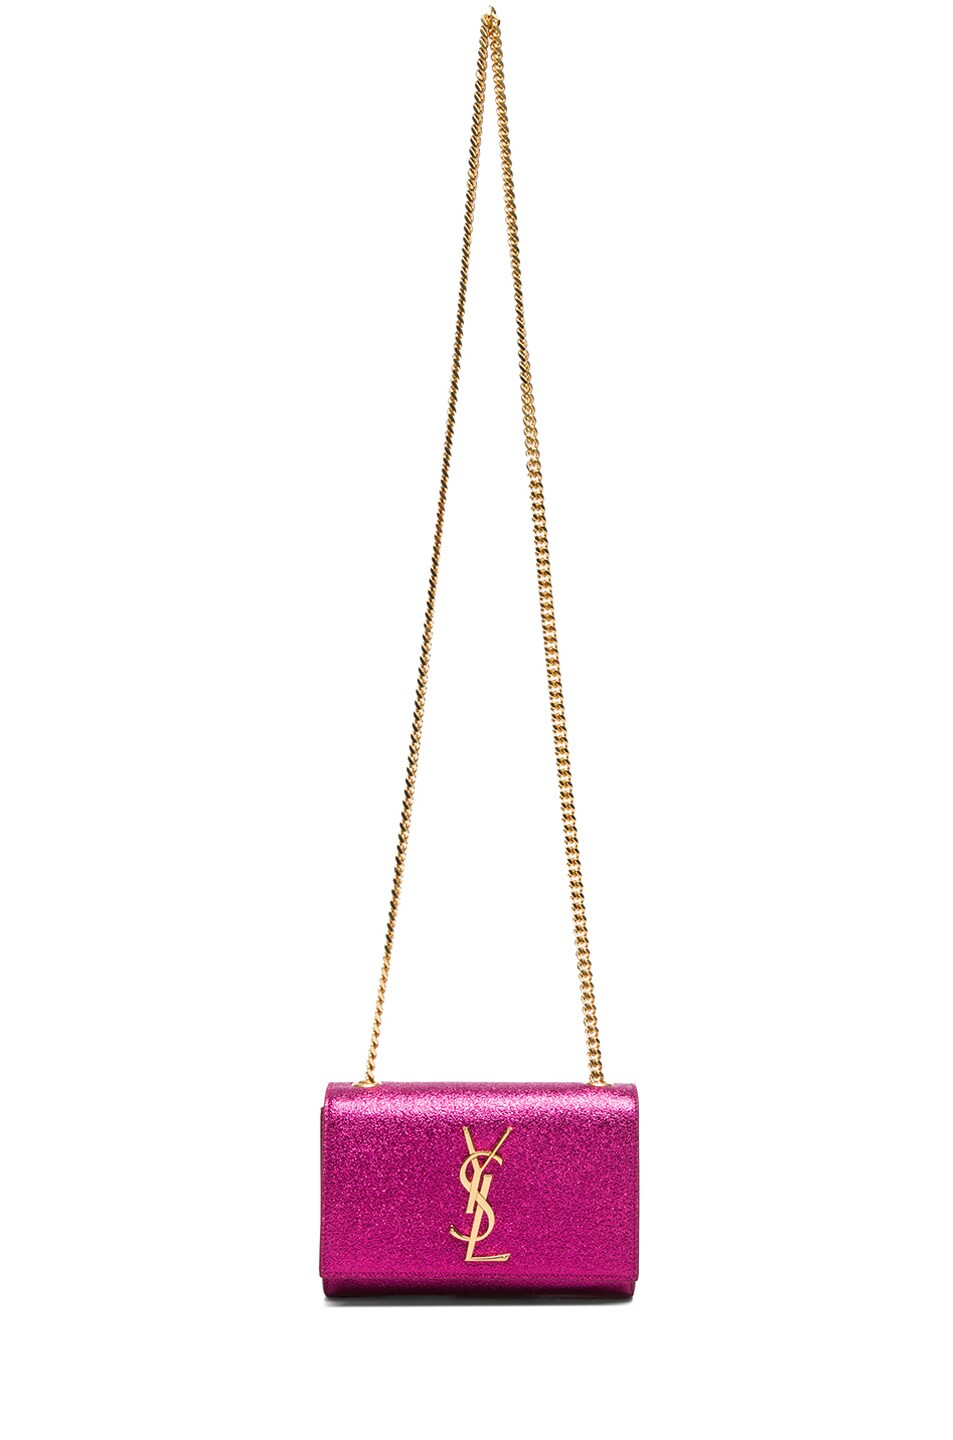 Saint Laurent Small Monogramme Chain Bag in Metallic Pink | FWRD